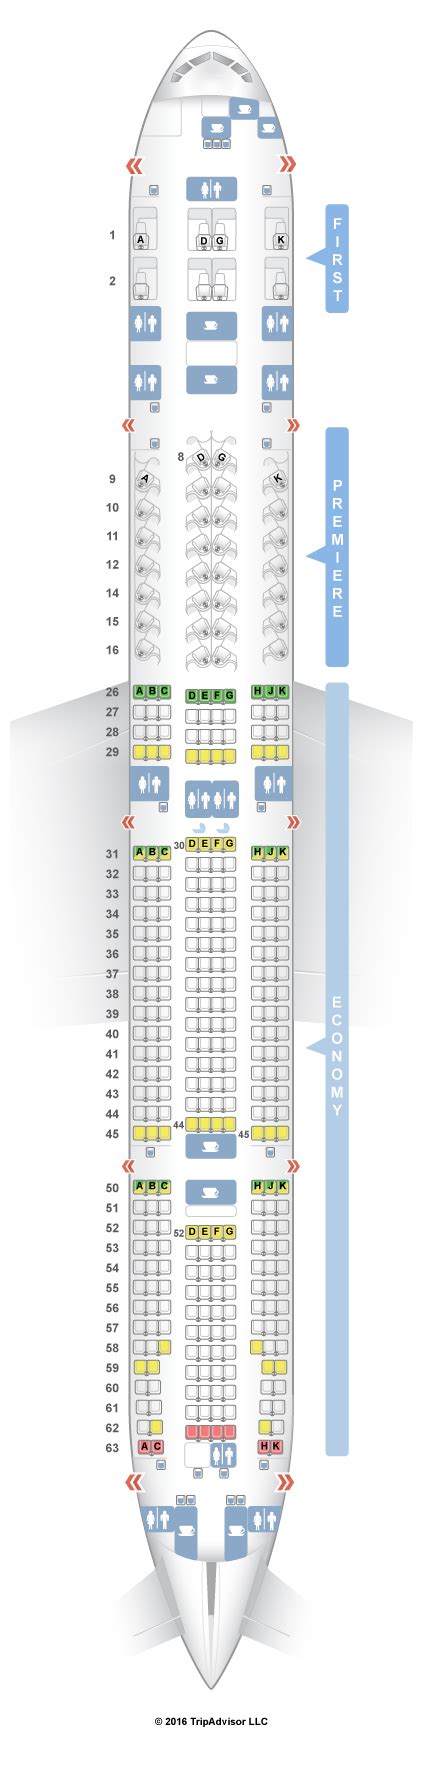 boeing 777-300er jet seating capacity